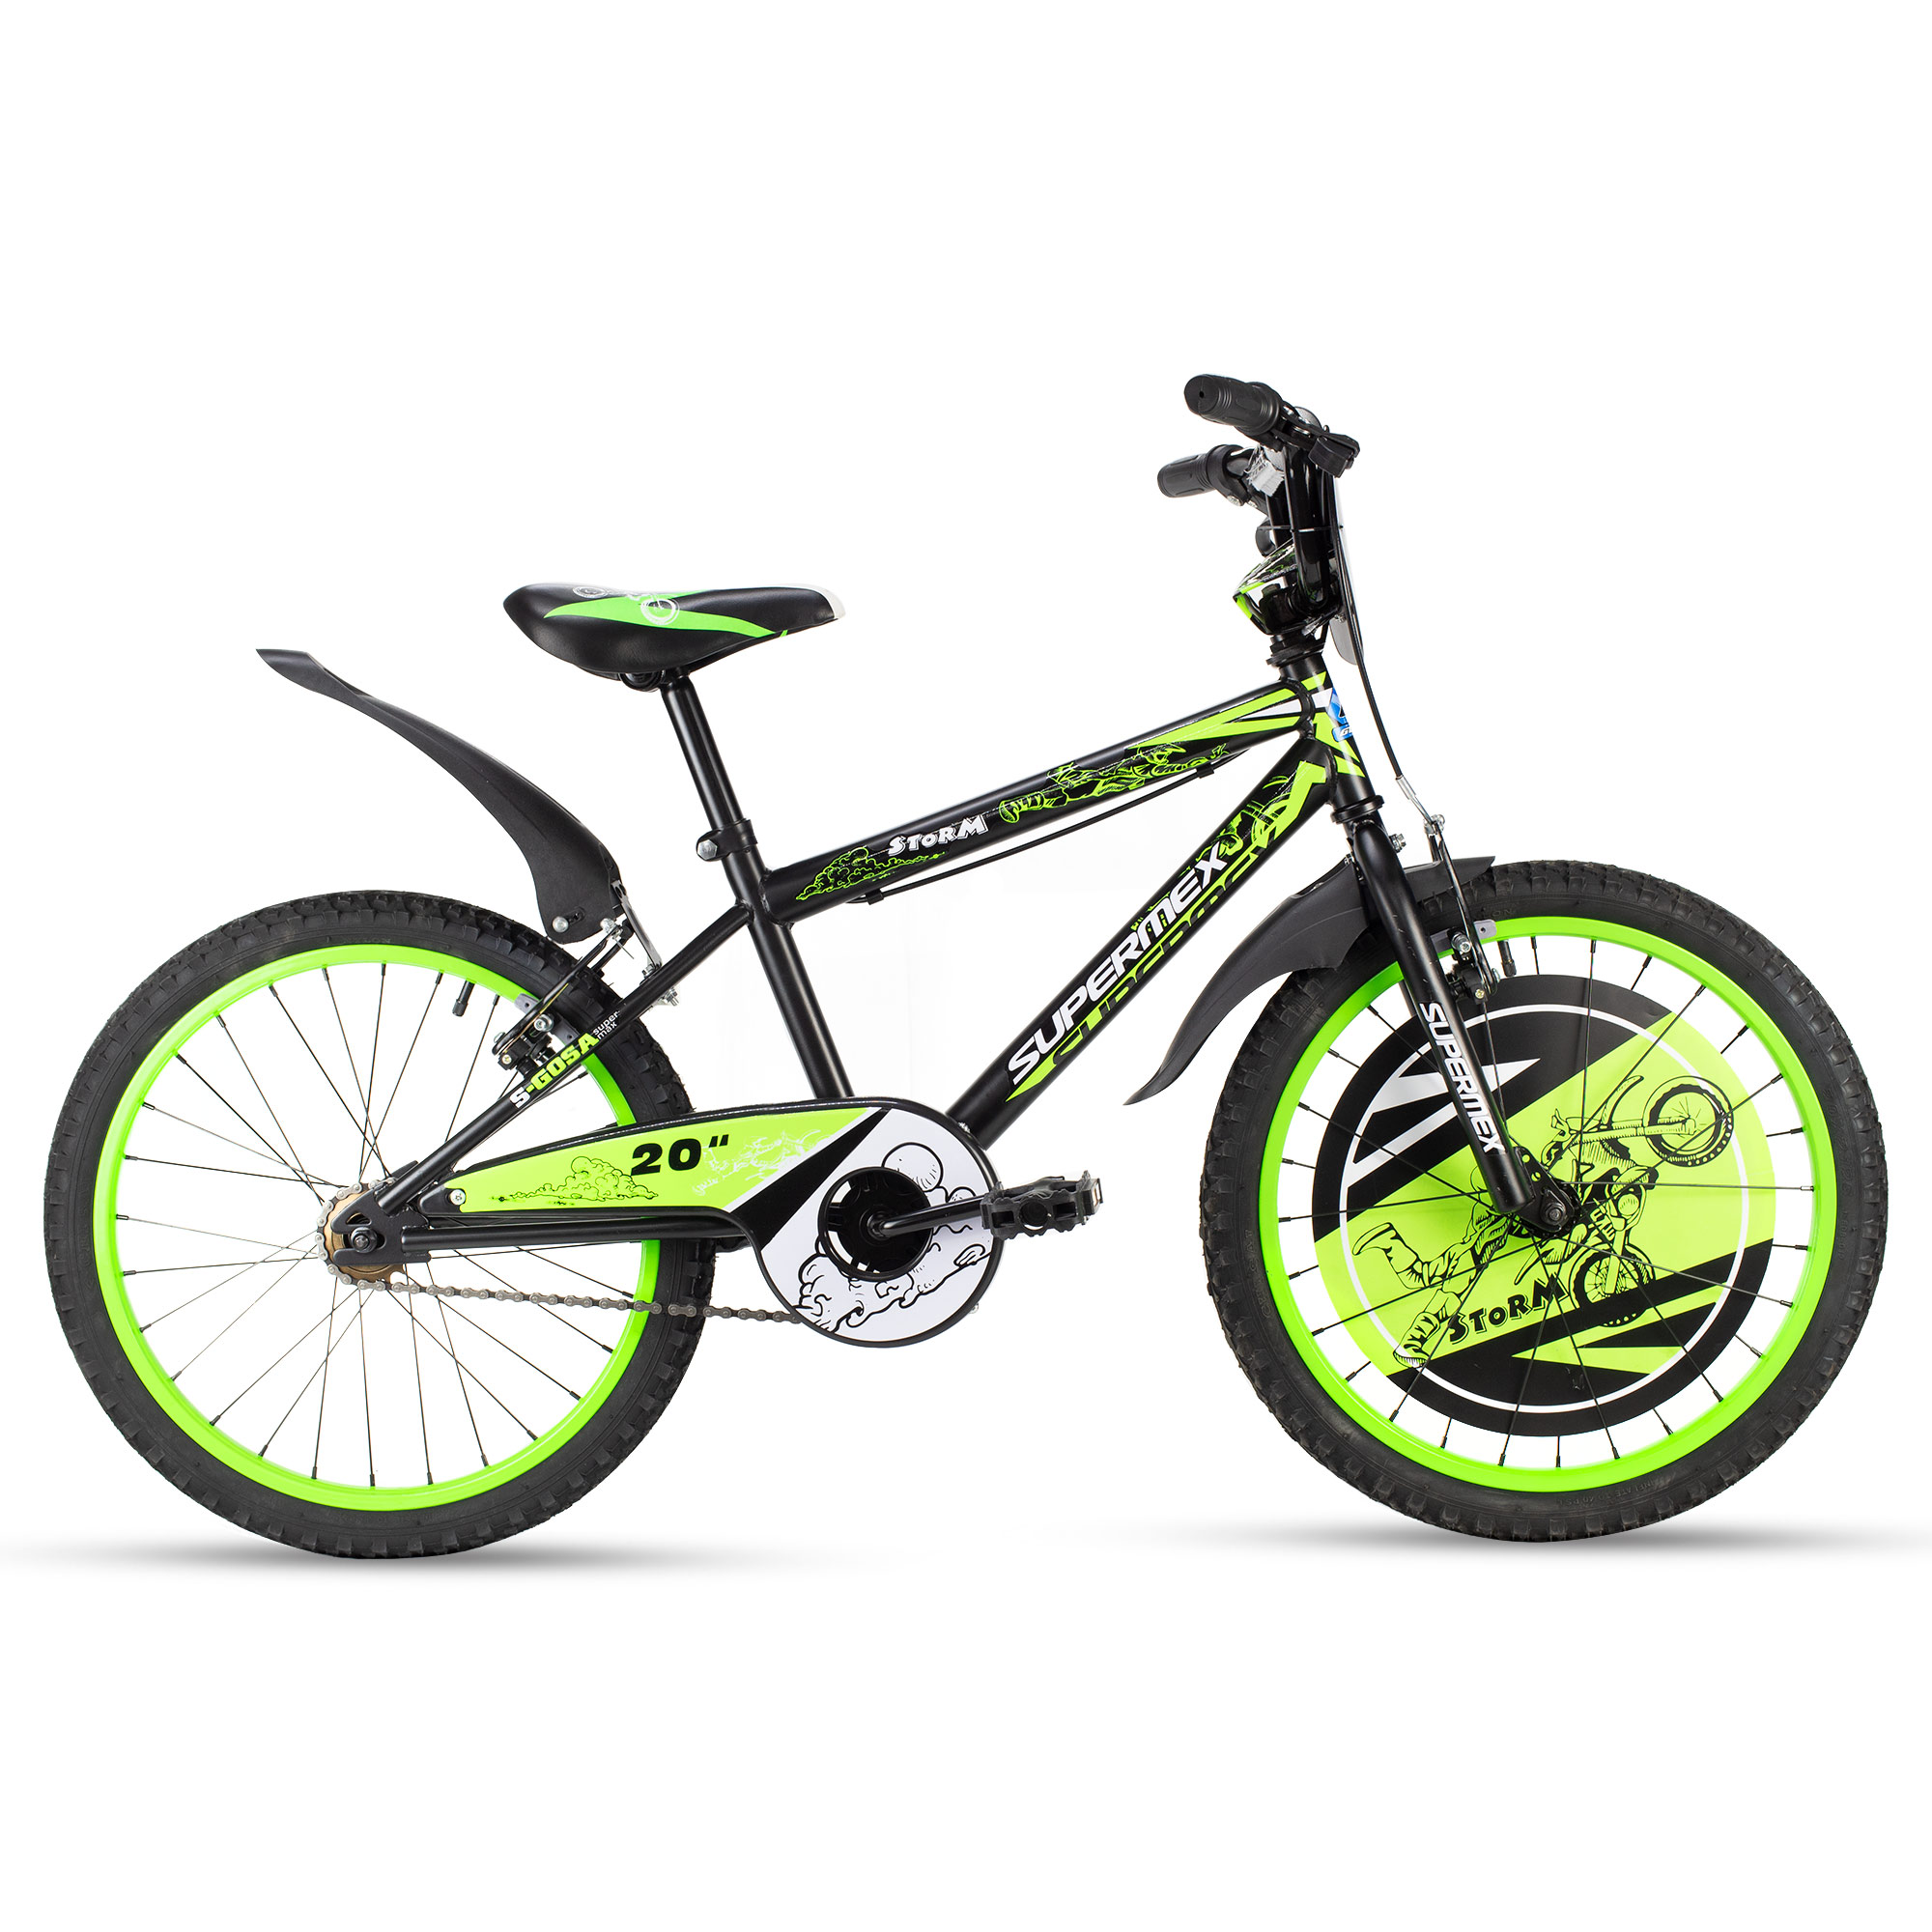 Ciclometa Detalles Bicicleta R 16 Infantil para Niño Storm 1 Velocidad Gosa